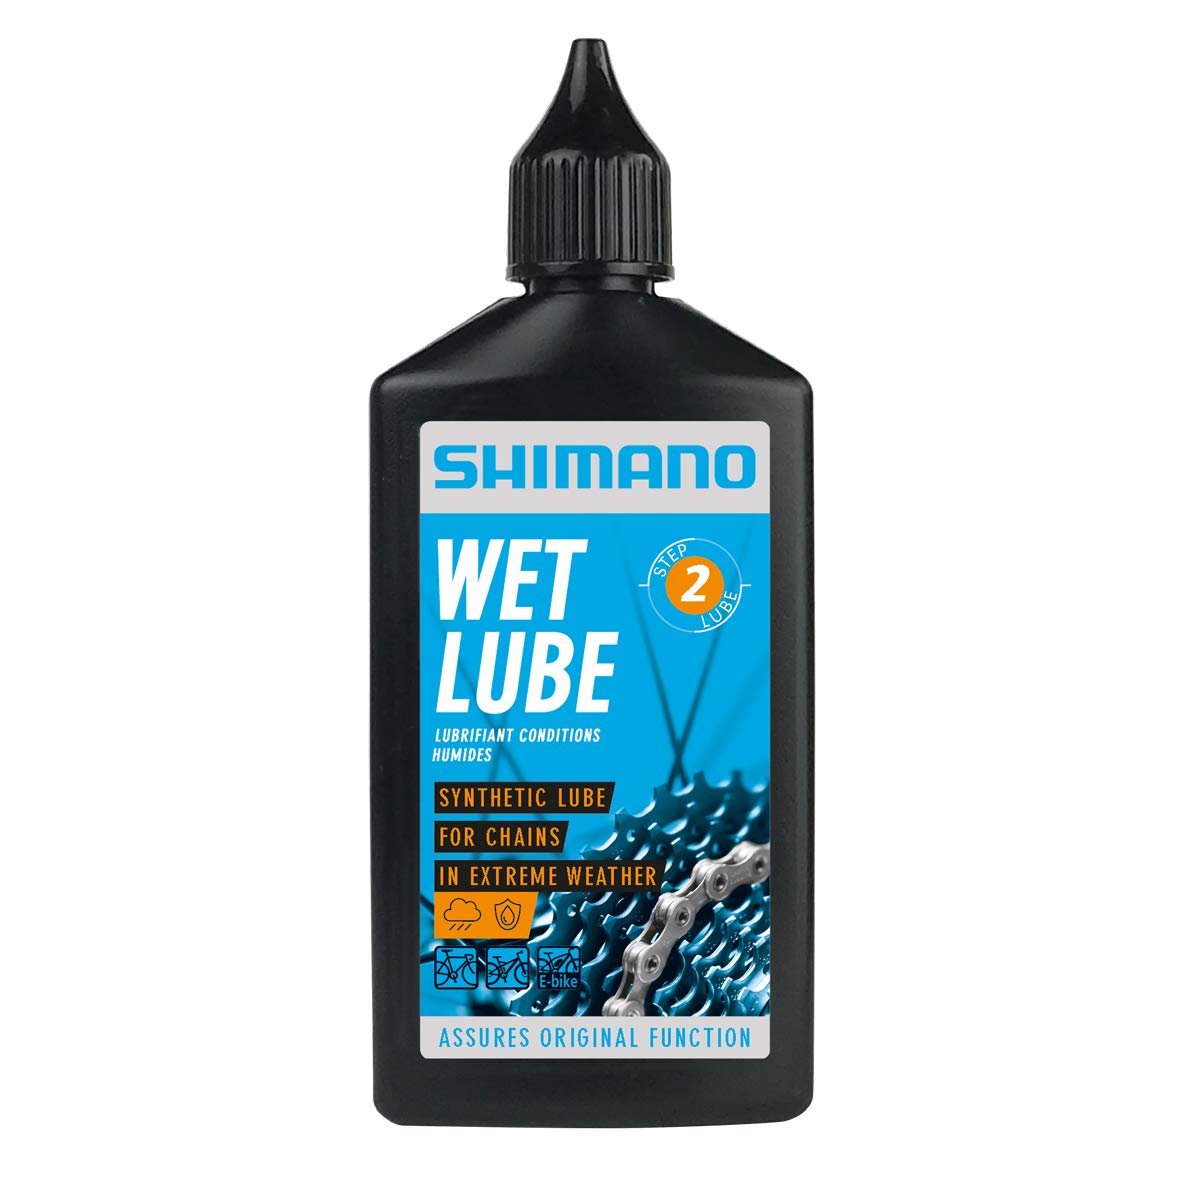 Смазка Shimano Wet Lube, для цепи, для влажной погоды, флакон, 100 мл, LBWL1B0100SA смазка muc off c3 ceramic dry lube 5ml sample для цепи б р 876